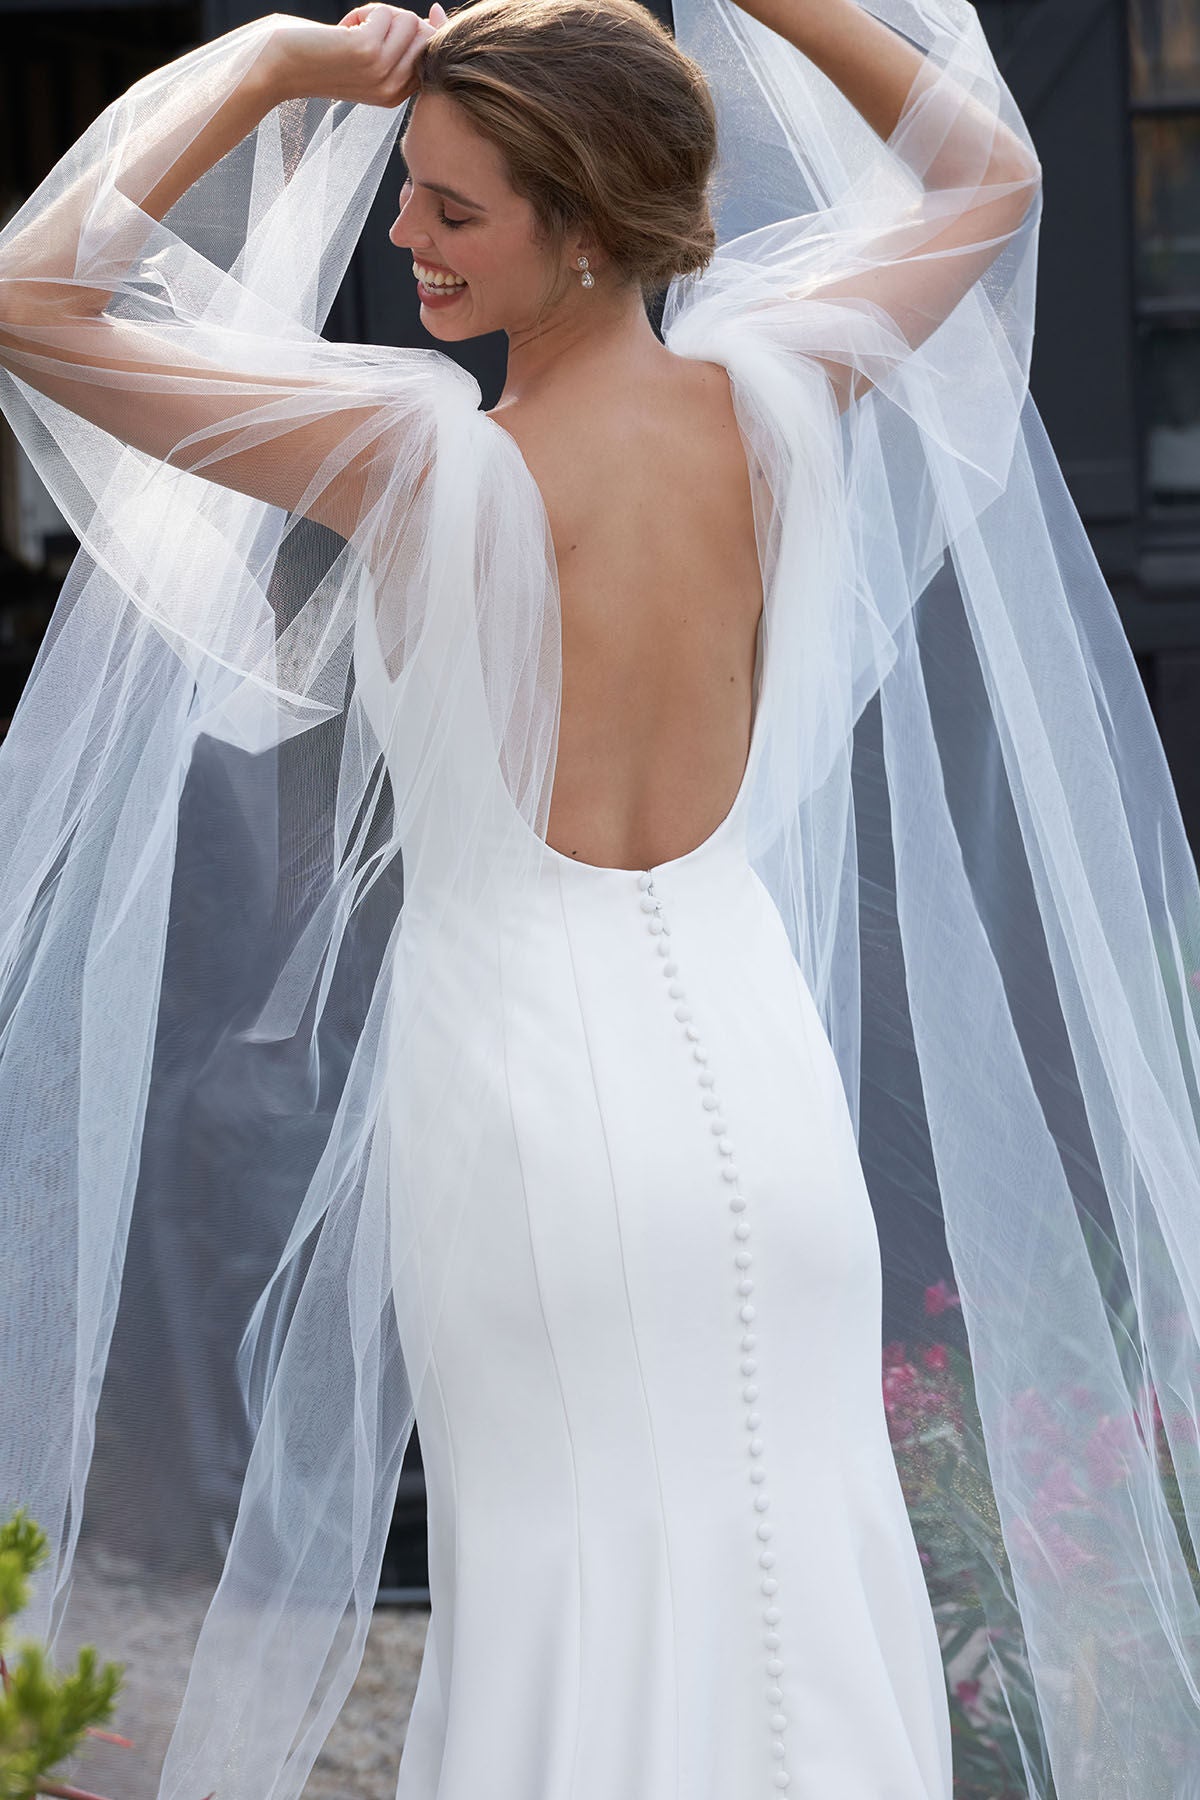 YouLaPan Bridal Wings Veil 2pc Shoulder Cape Veil Wedding Cloak Ivory / 300cm 118 inch Length